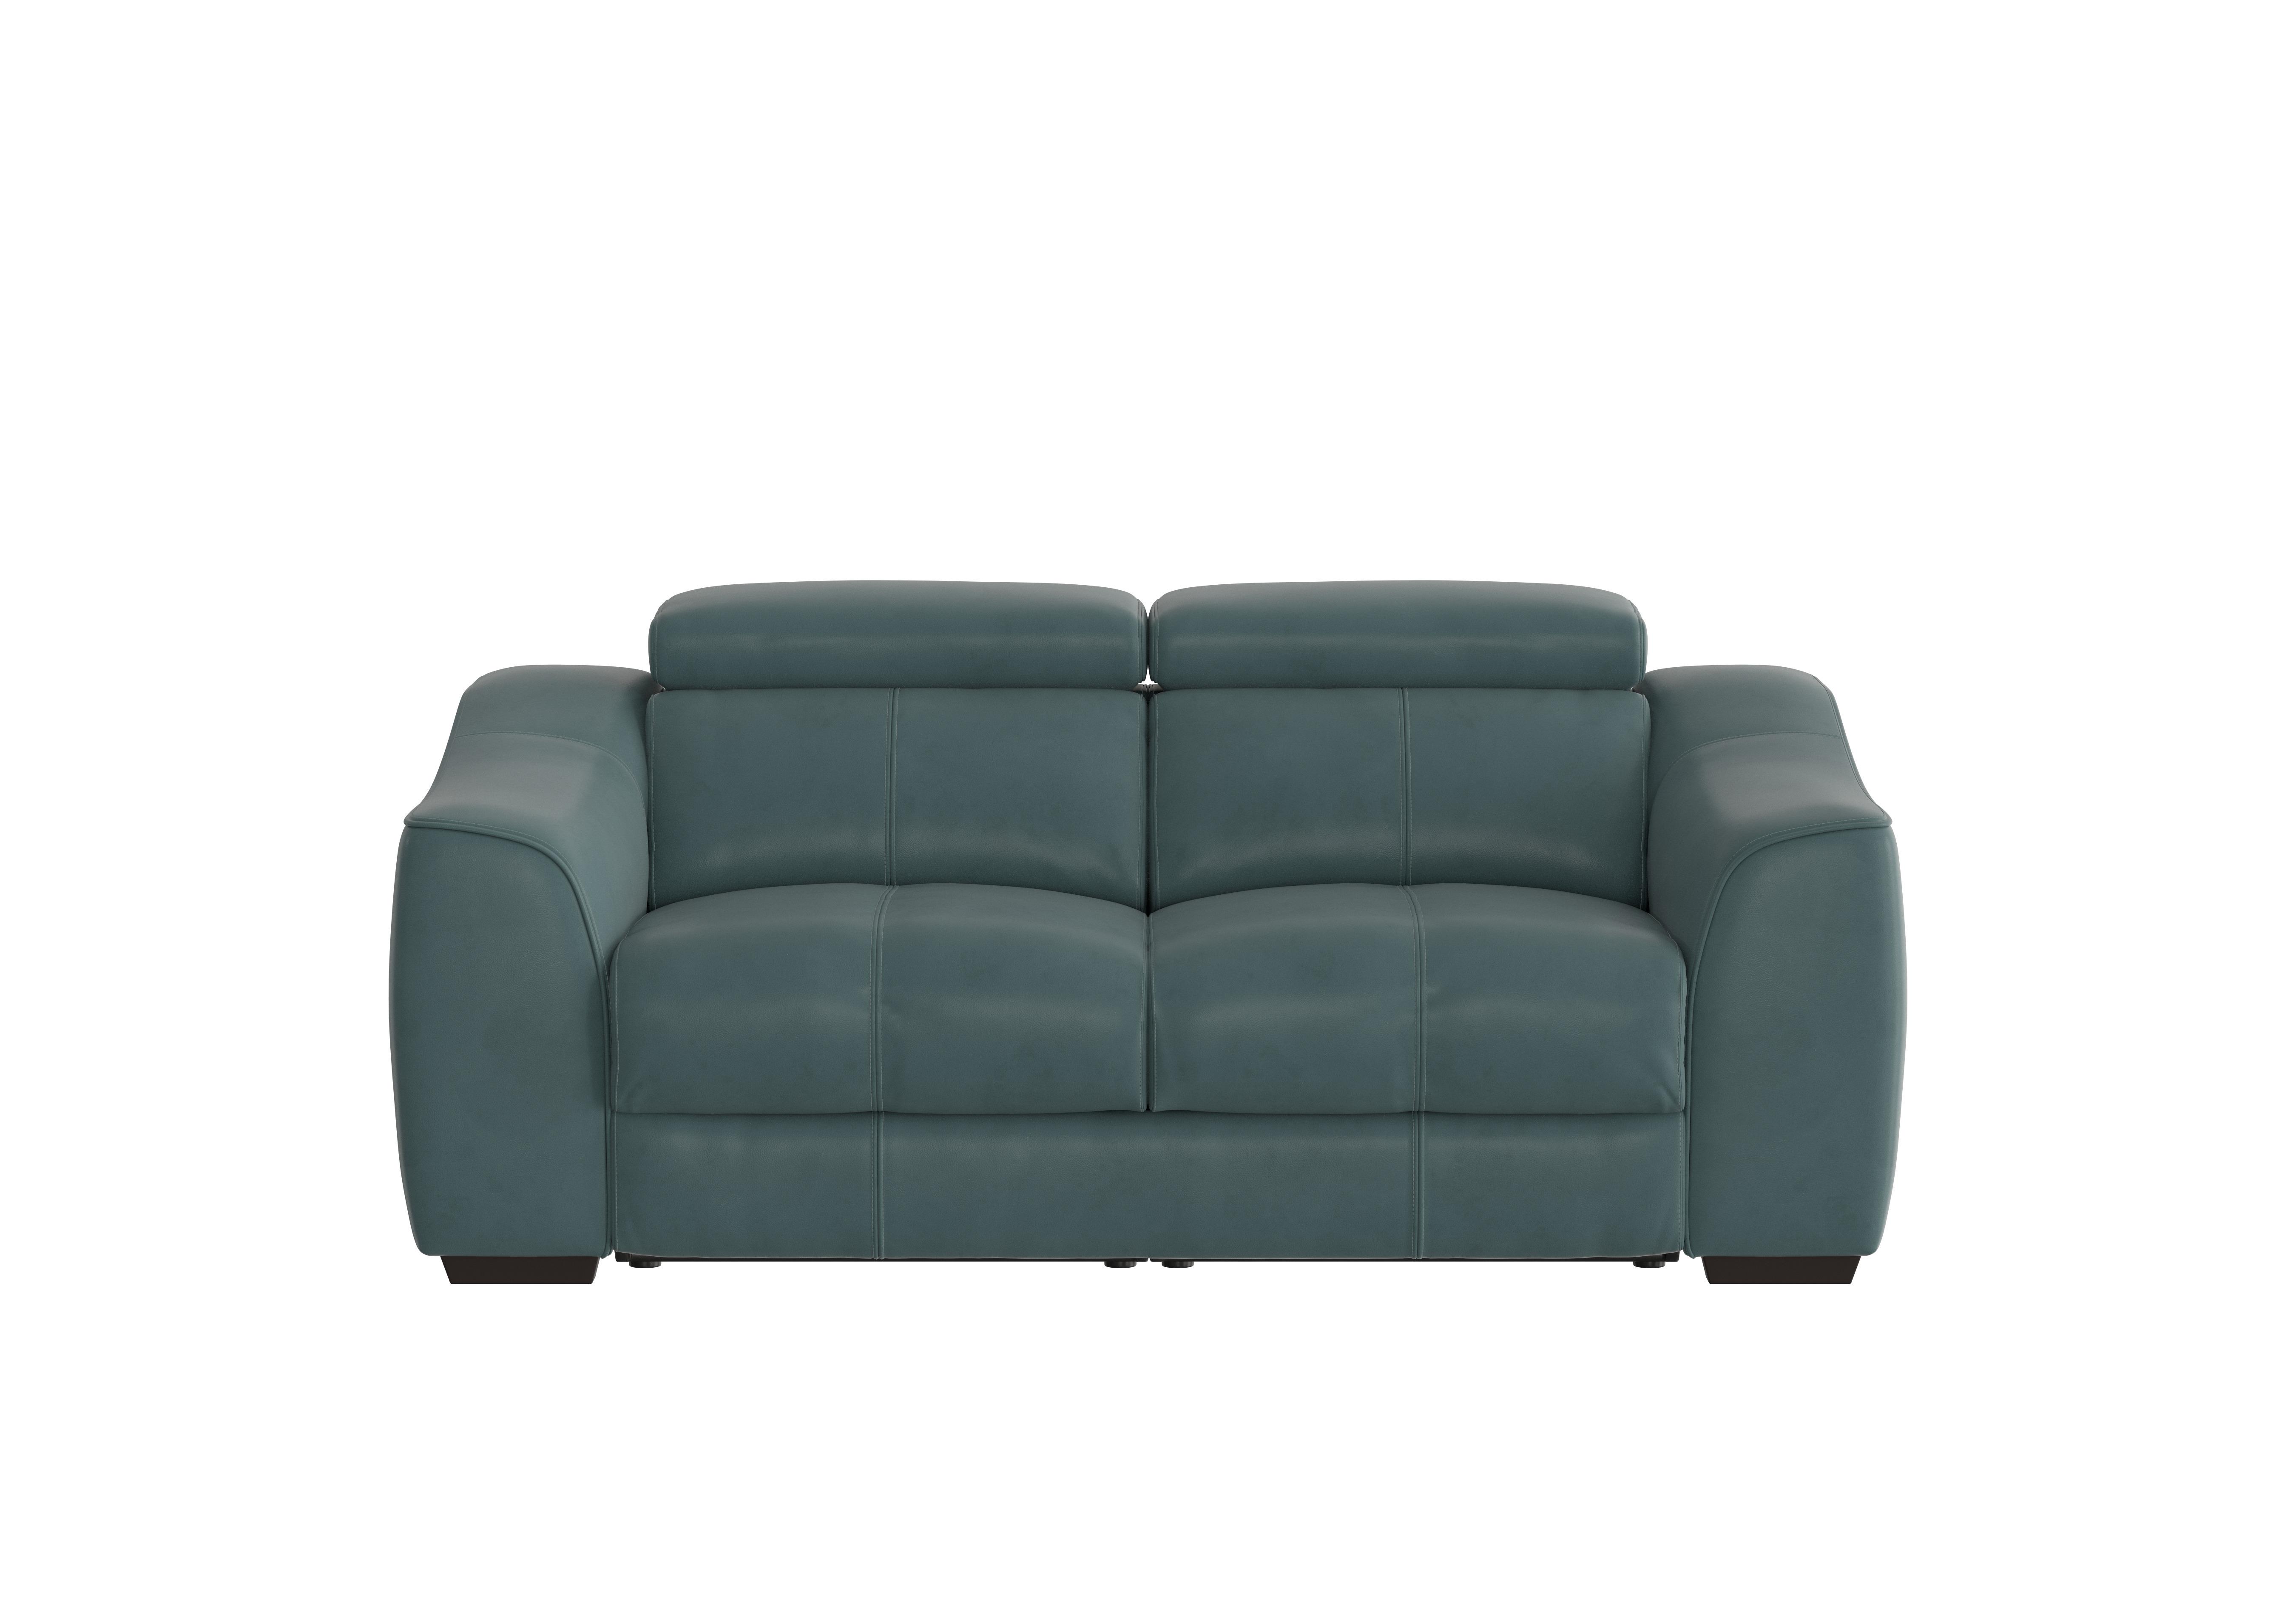 Elixir 2 Seater Leather Sofa in Bv-301e Lake Green on Furniture Village